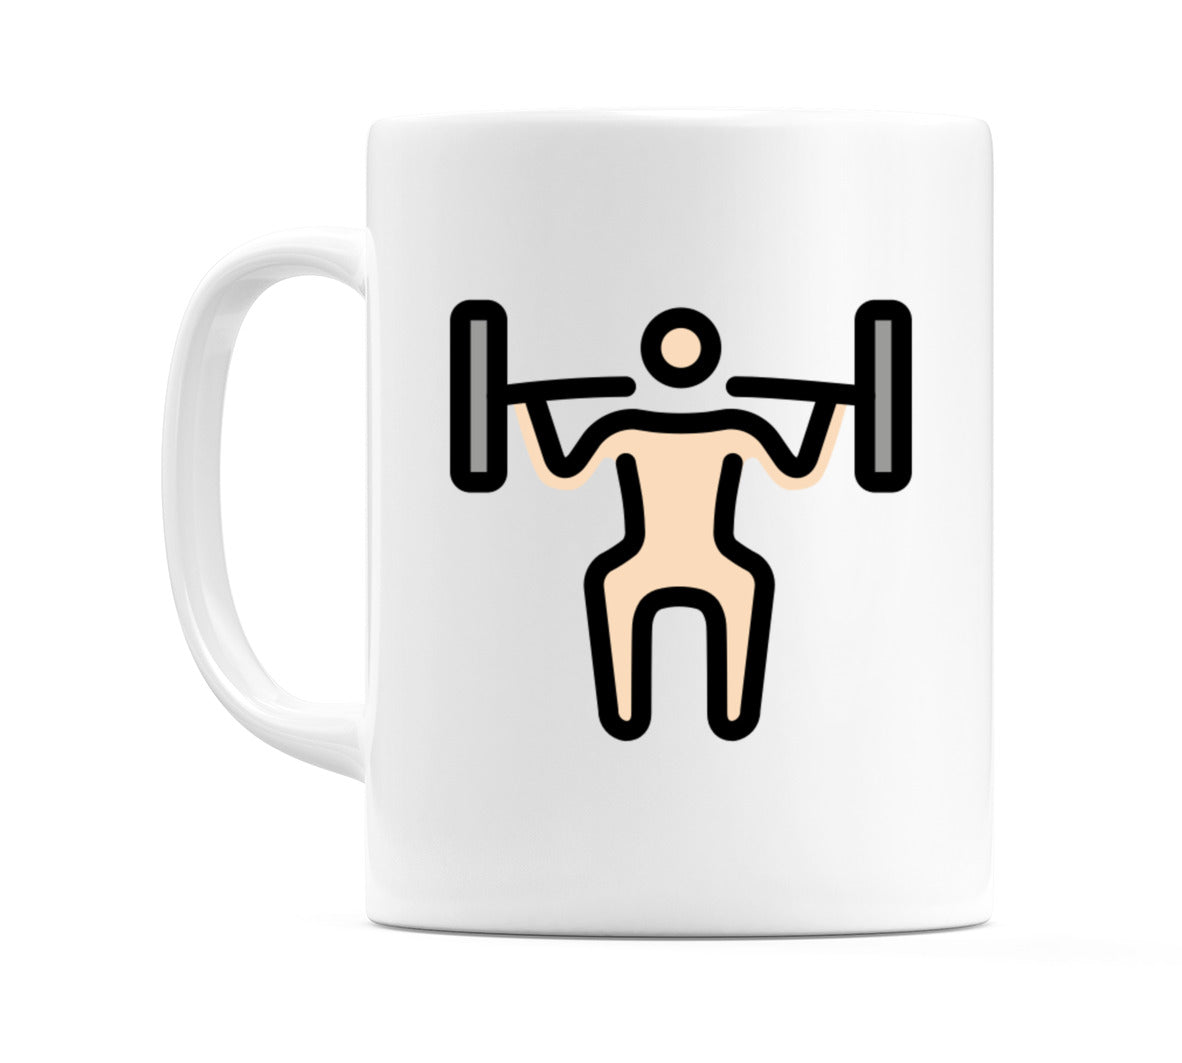 Male Lifting Weights: Light Skin Tone Emoji Mug